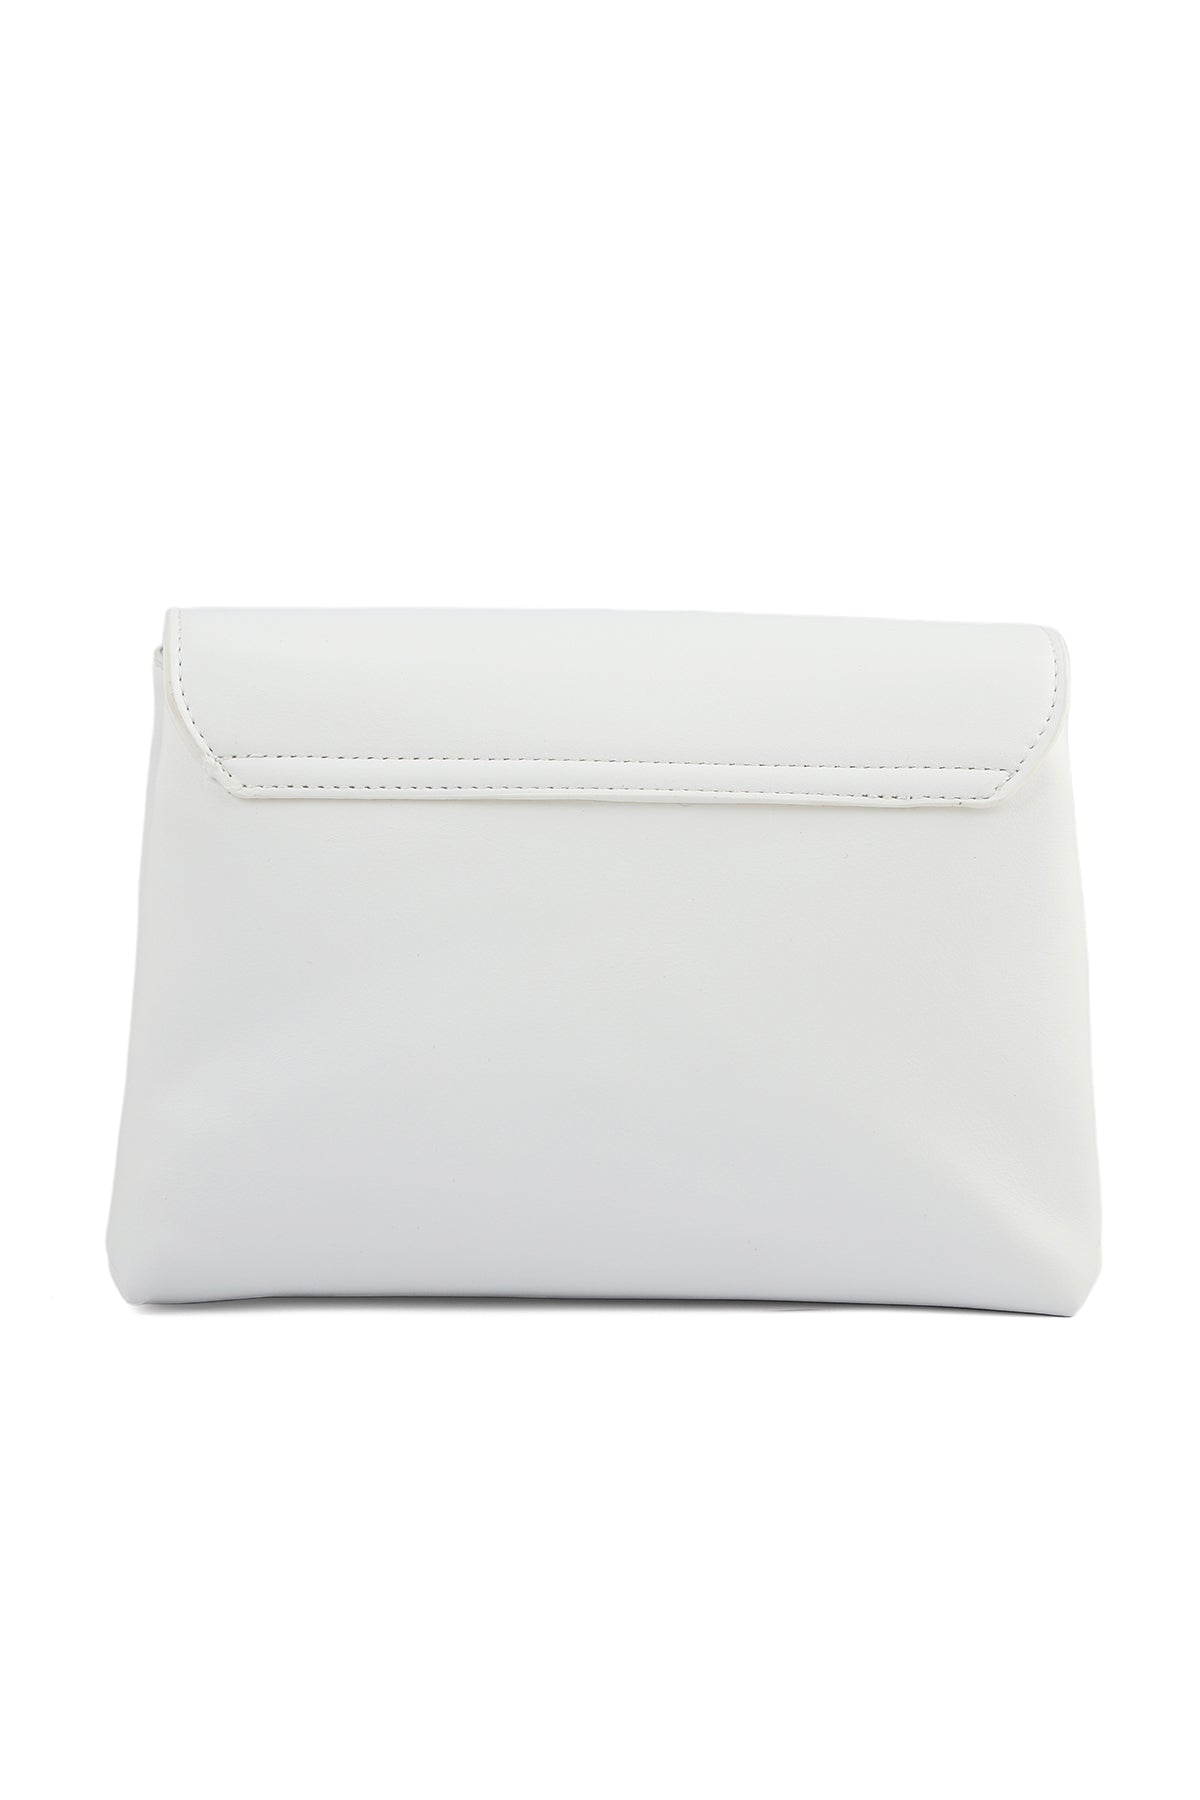 Flap Shoulder Bags B15028-White